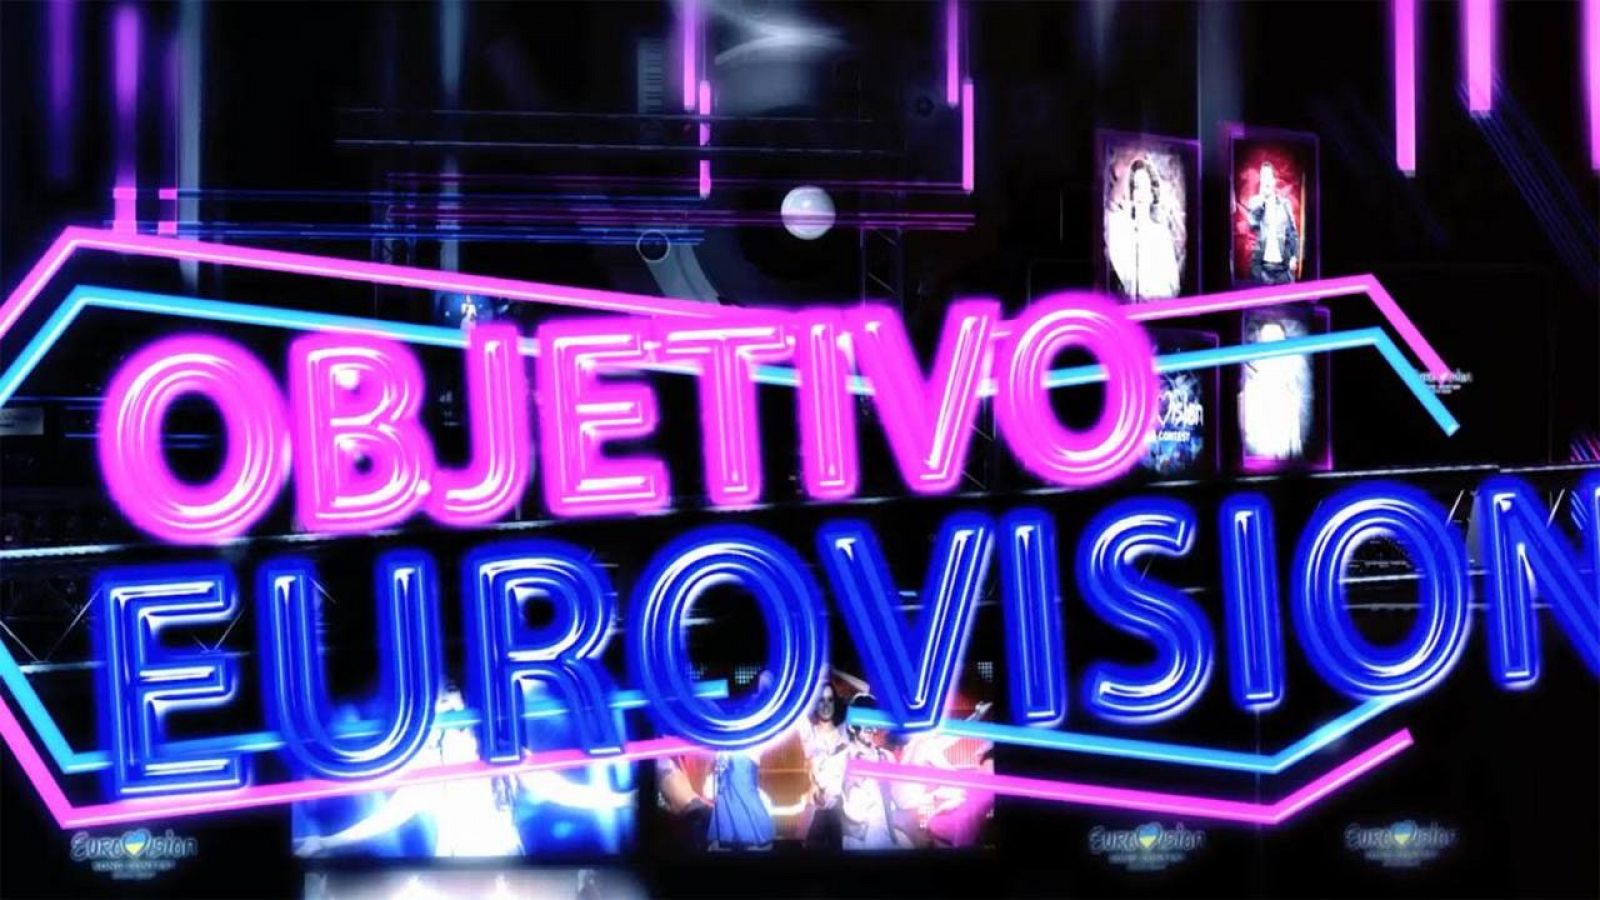  'Objetivo Eurovisión'